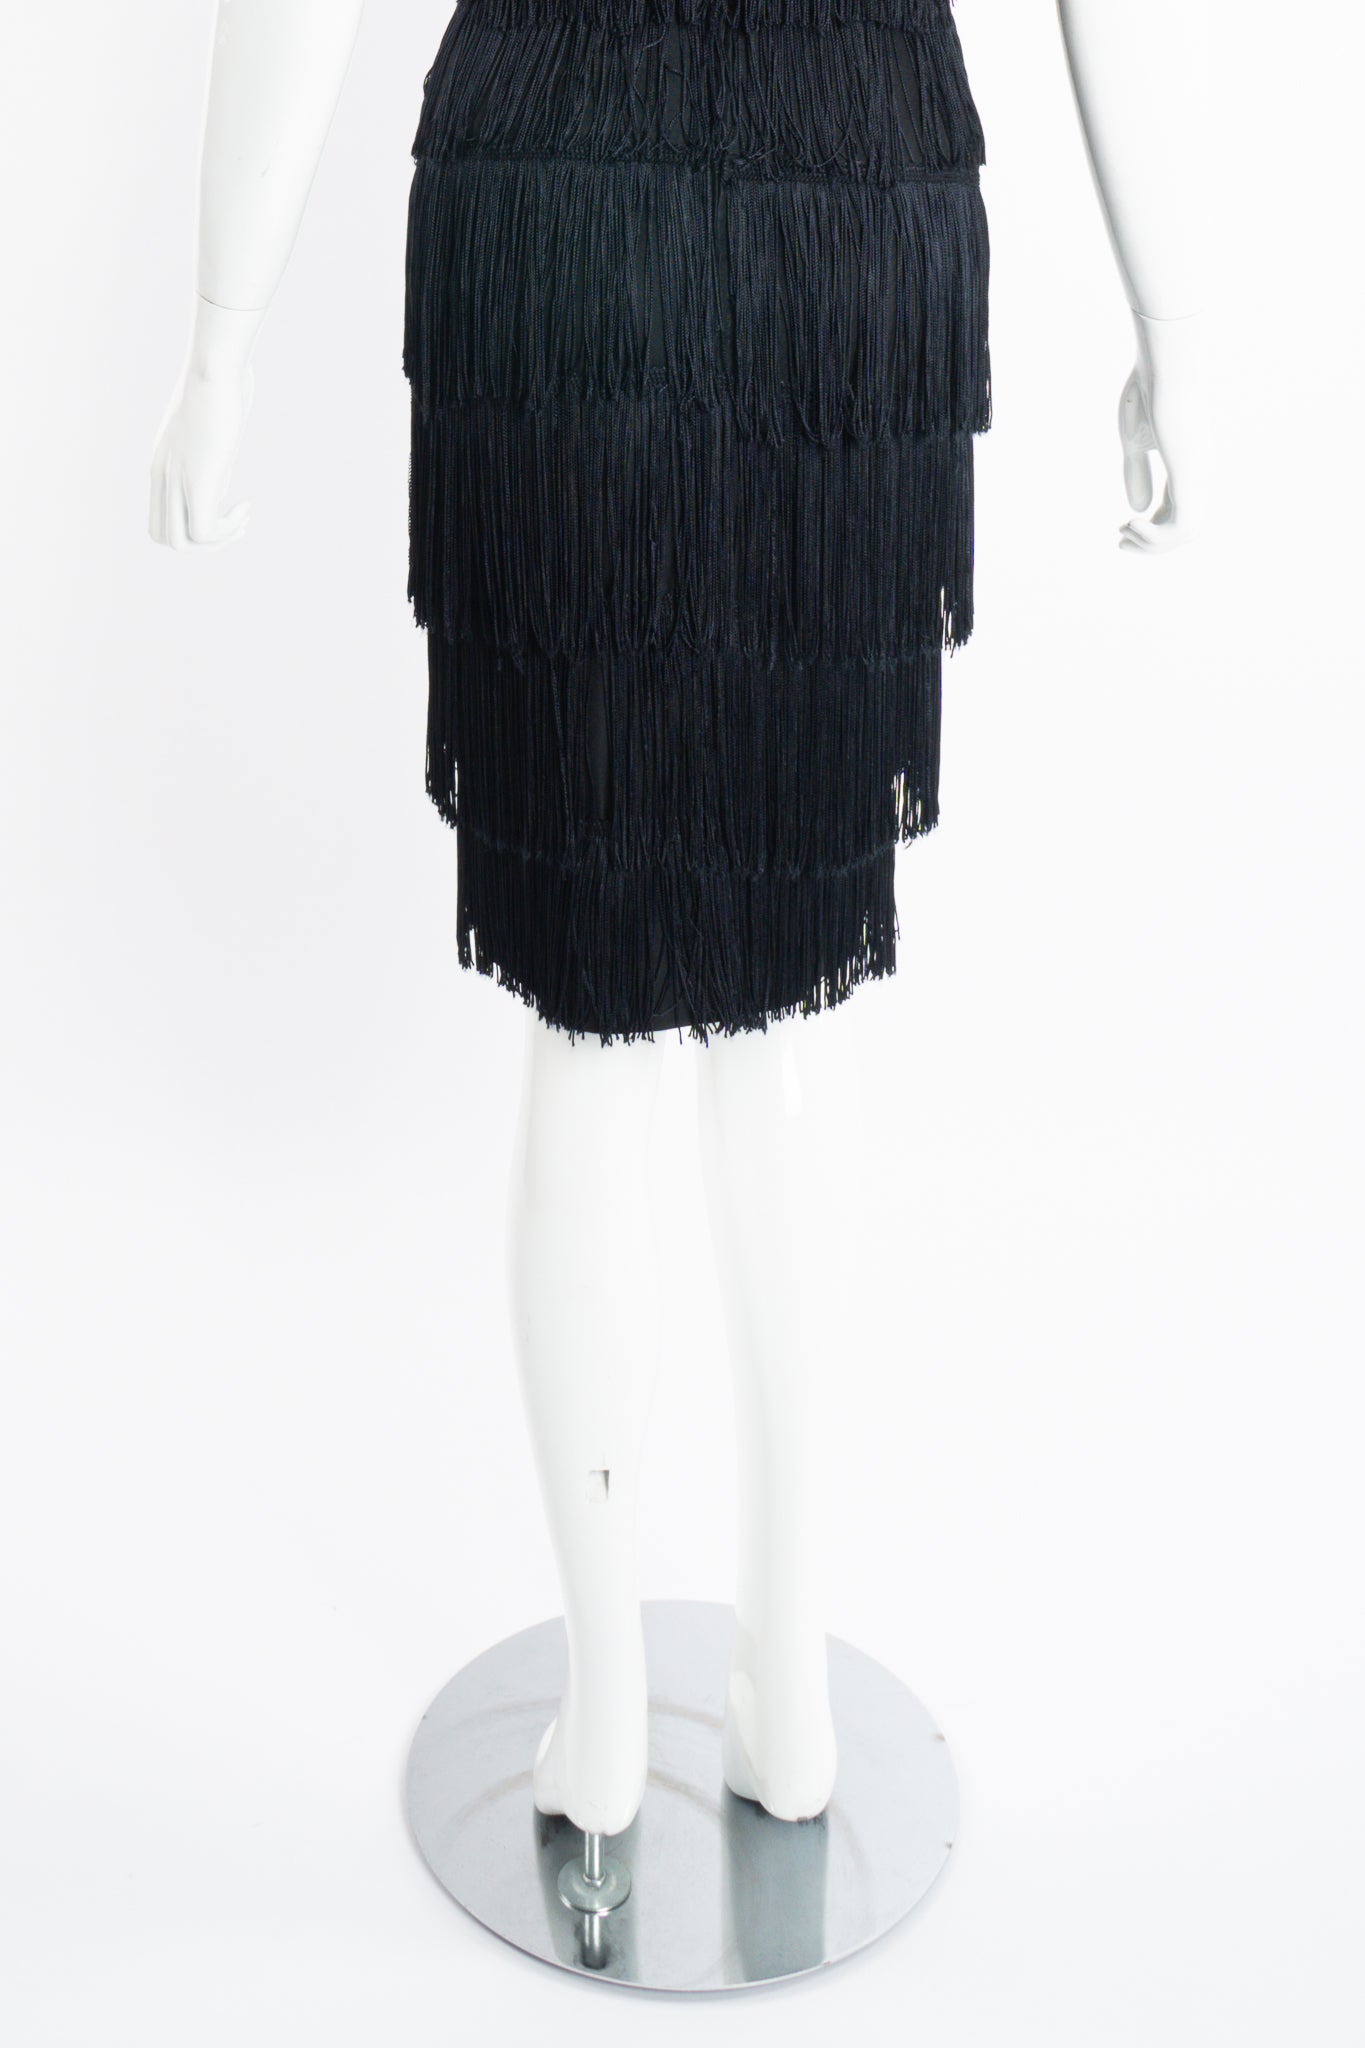 Vintage Norma Kamali Strapless Fringe Shimmy Sheath on Mannequin skirt at Recess Los Angeles